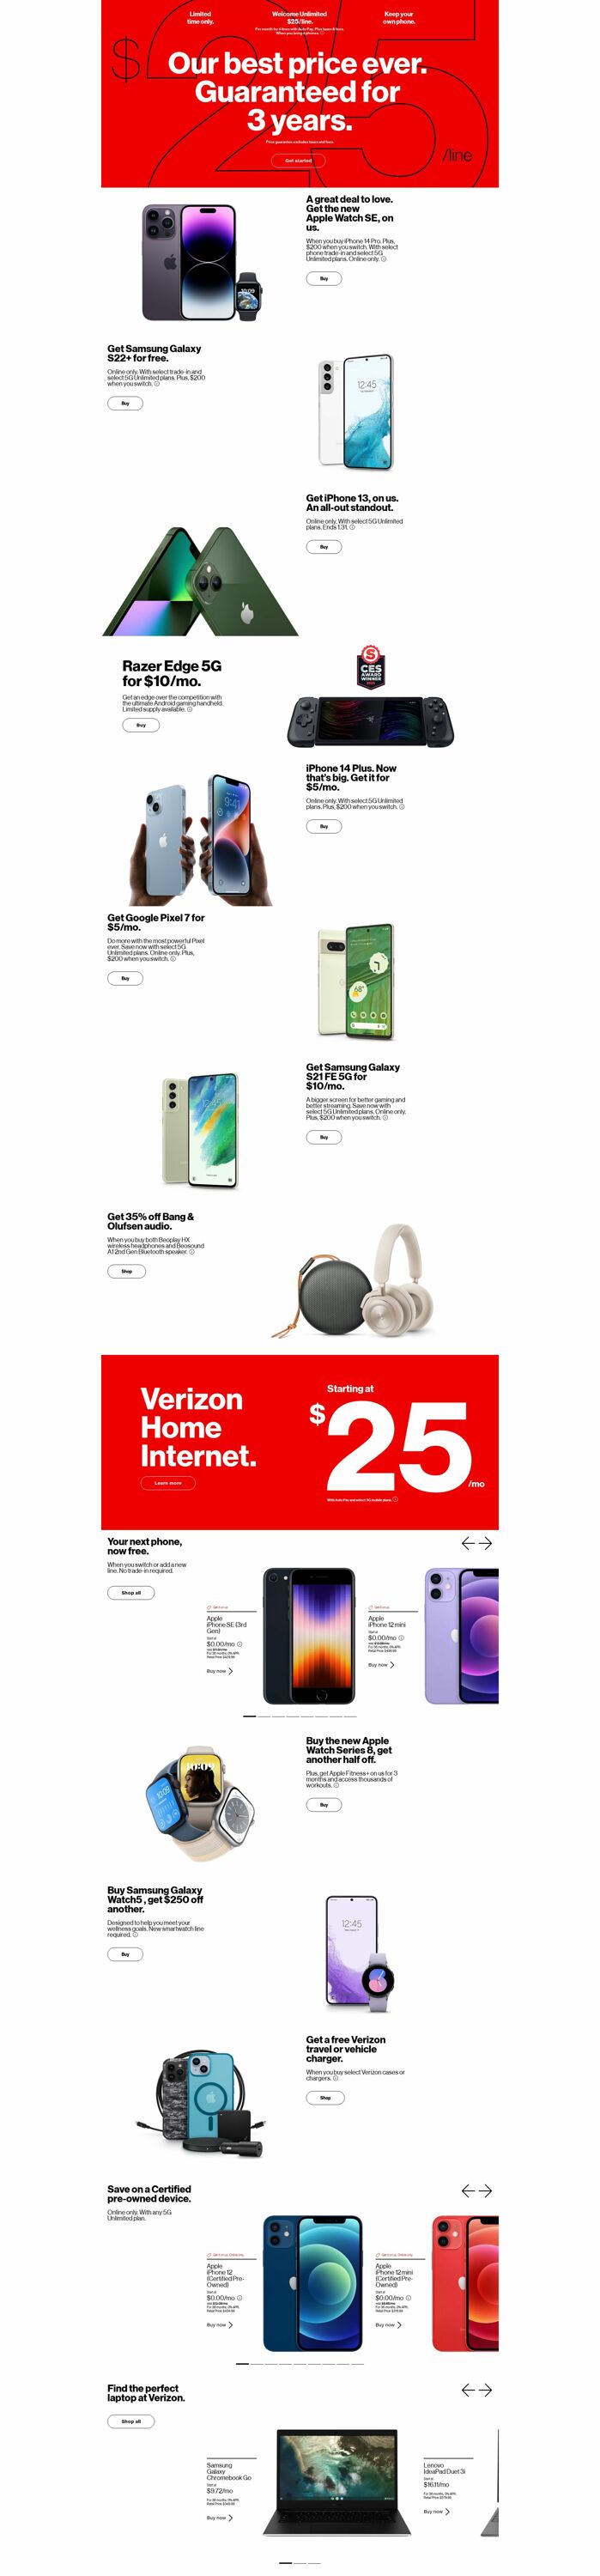 Verizon Promotional weekly ads